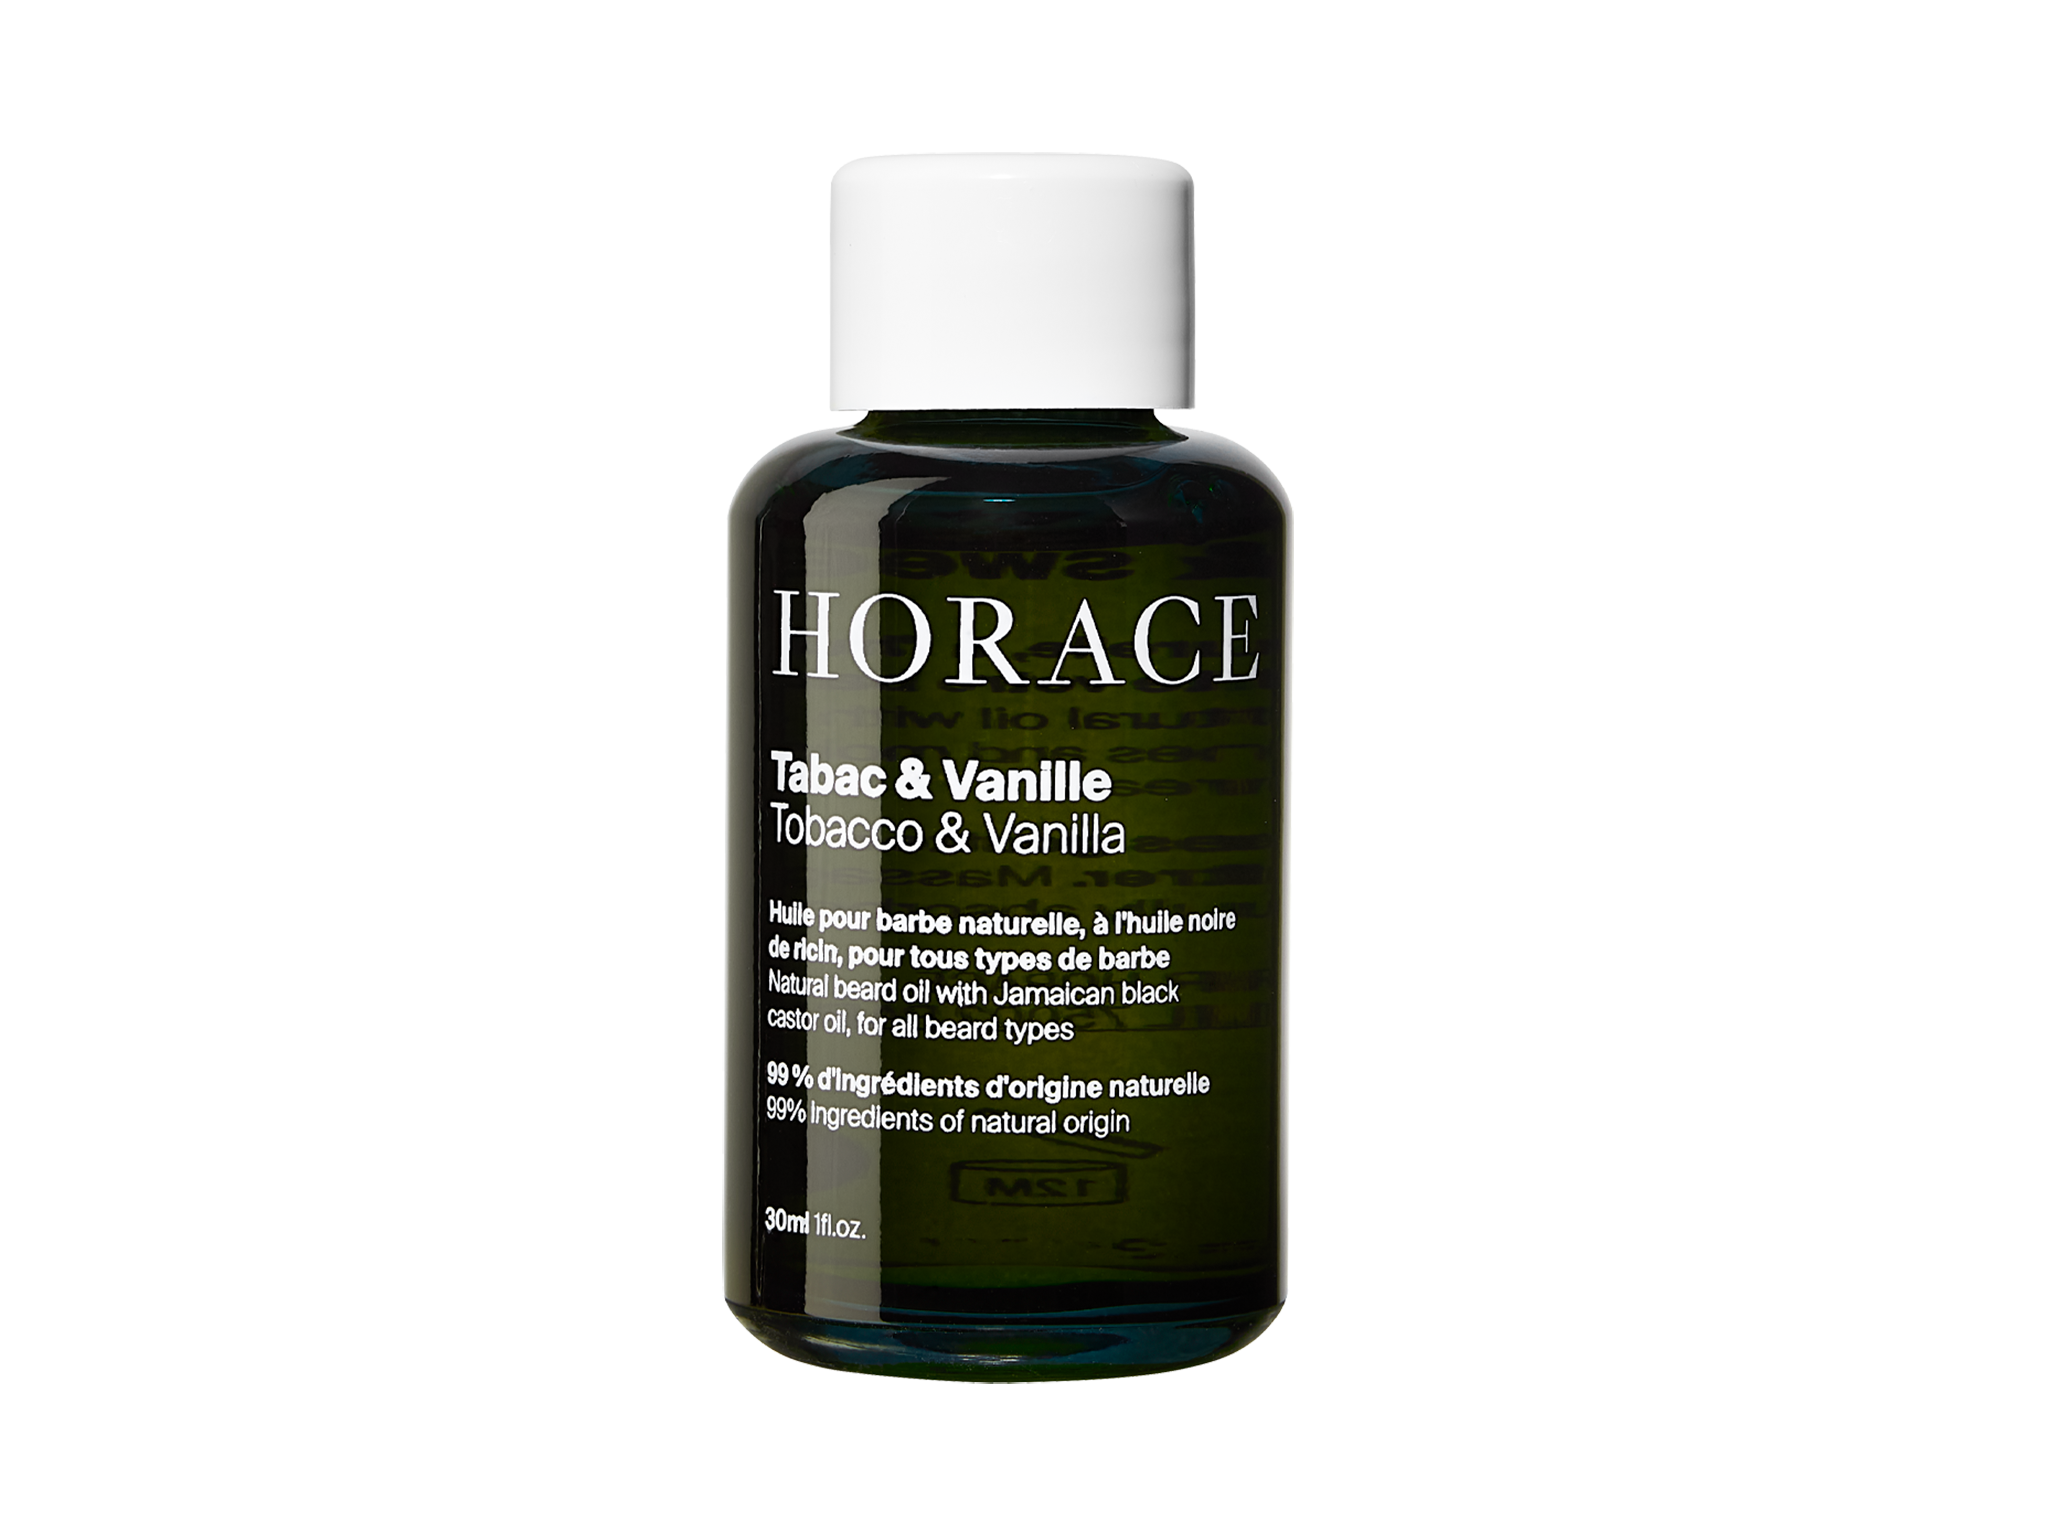 Horace tobacco & vanilla beard oil.png